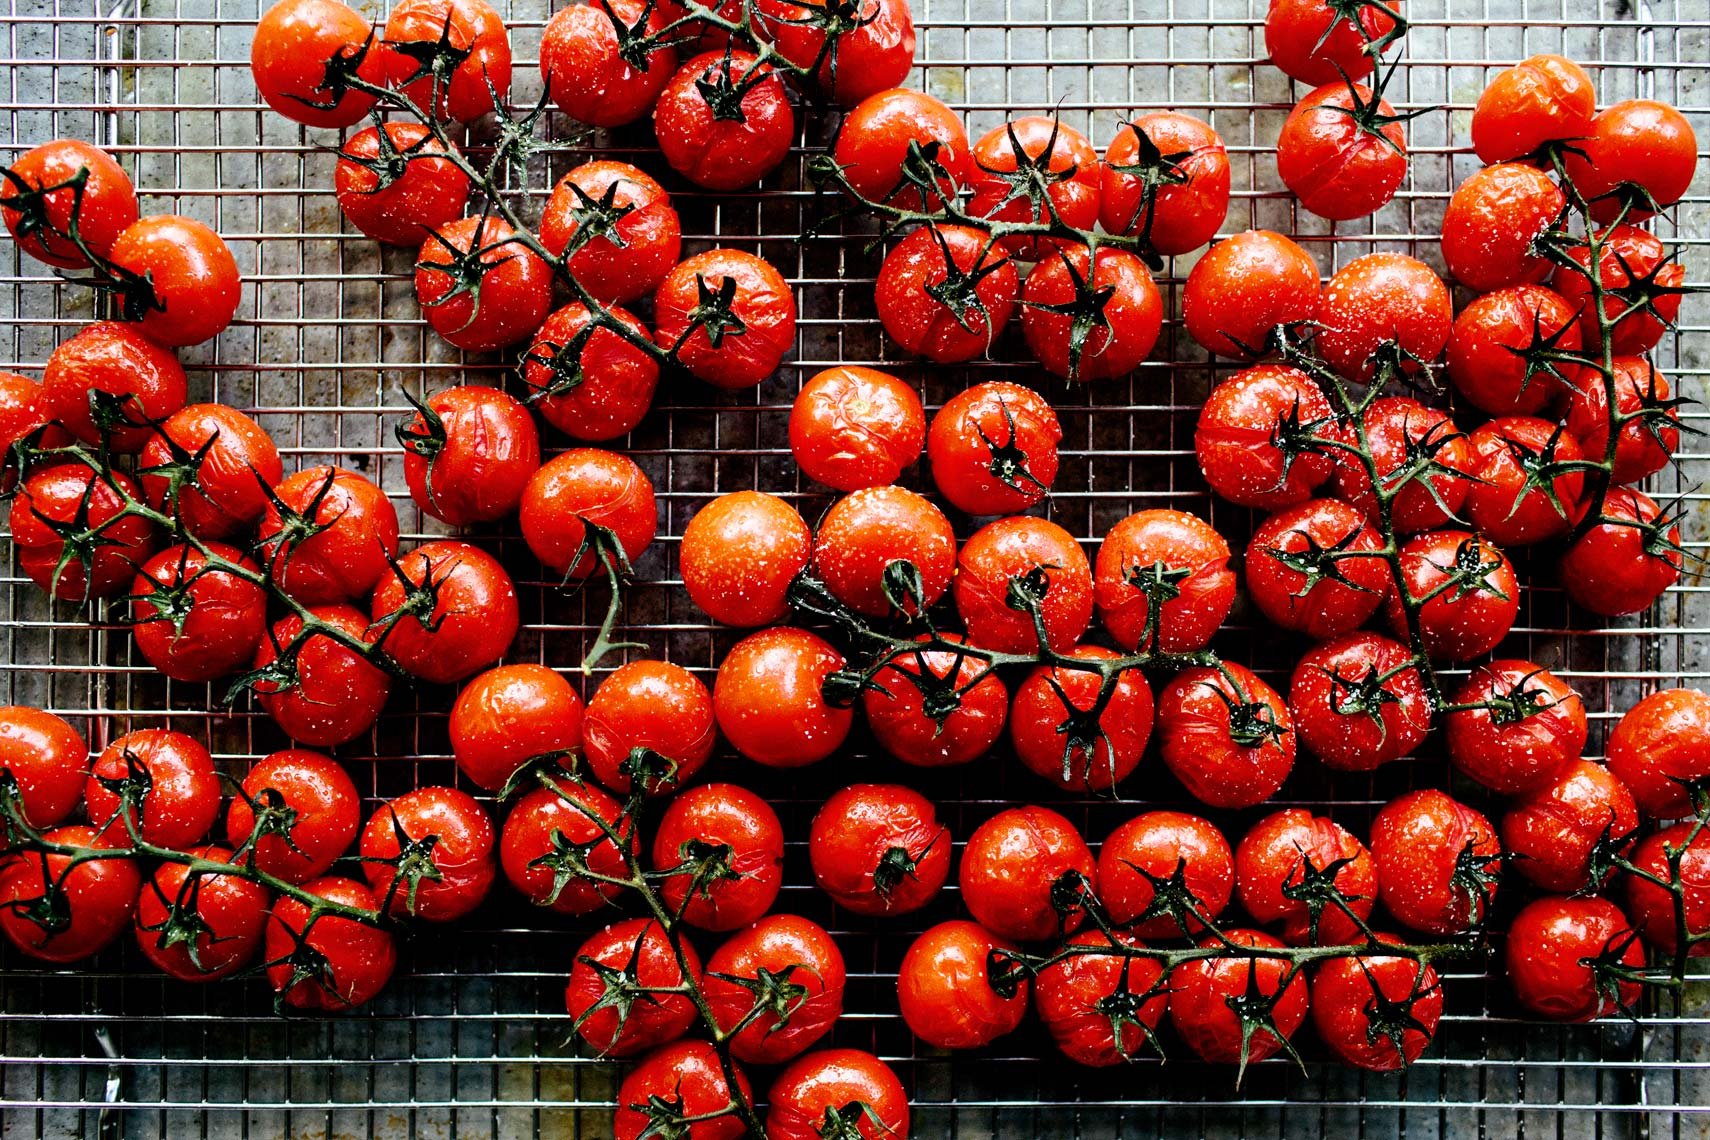 kristin-teig-tomatoes-1087.jpg